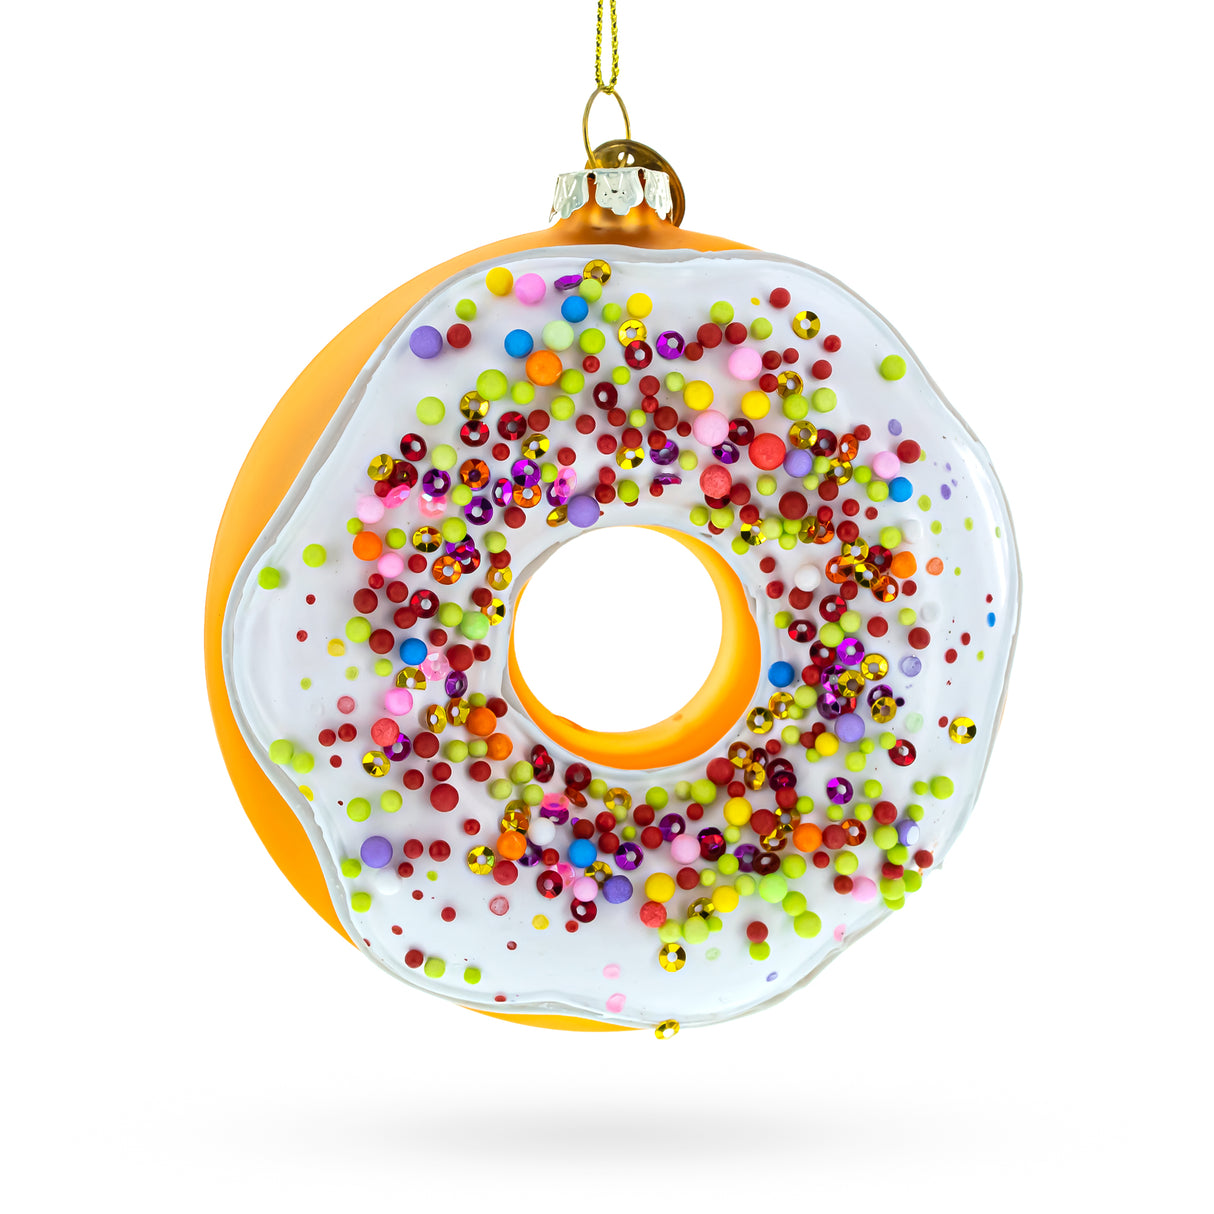 Tempting Doughnut Delight - Blown Glass Christmas Ornament in Multi color, Round shape